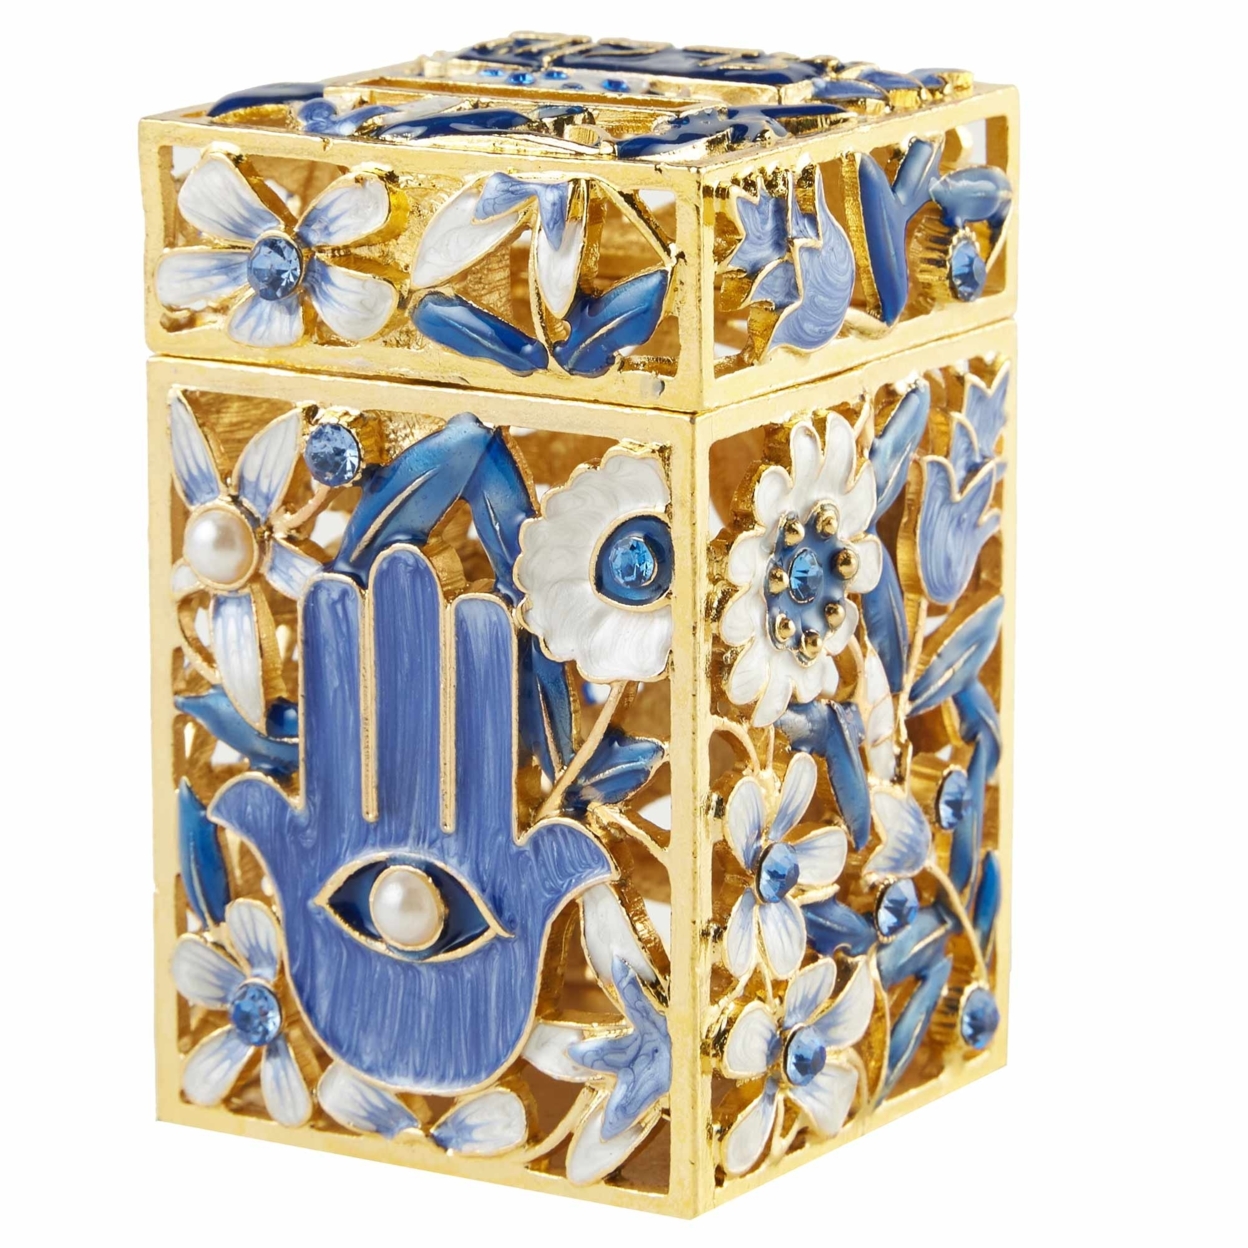 Matashi Hand-Painted Enamel Tzedakah Charity Box Keepsake Treasure Box W/ Crystals & Hamsa Protects Against Evil Eye Motif Design, Judaica